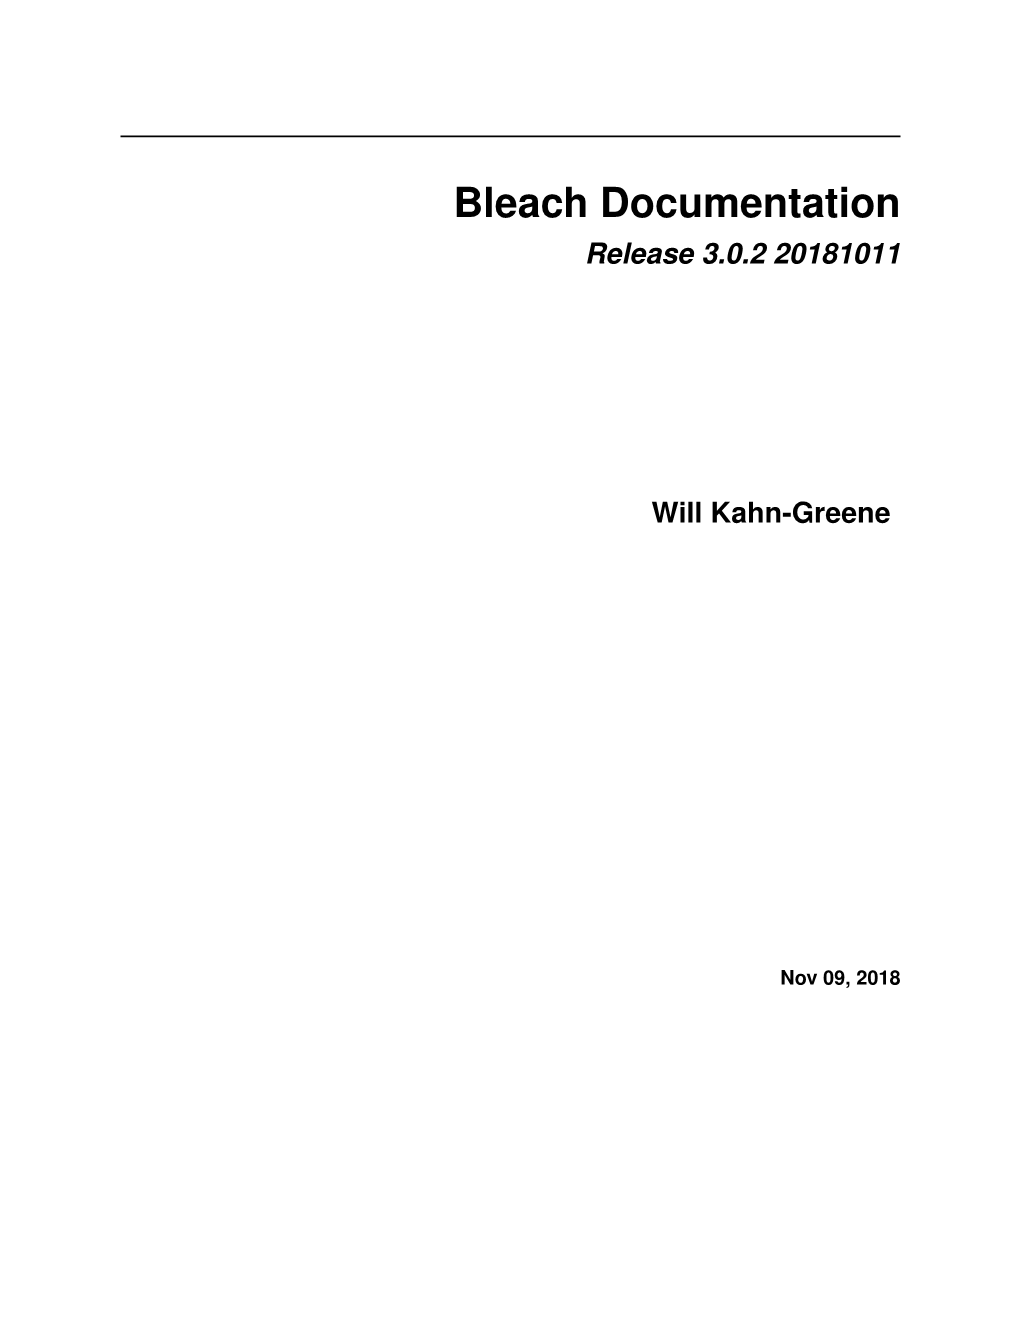 Bleach Documentation Release 3.0.2 20181011